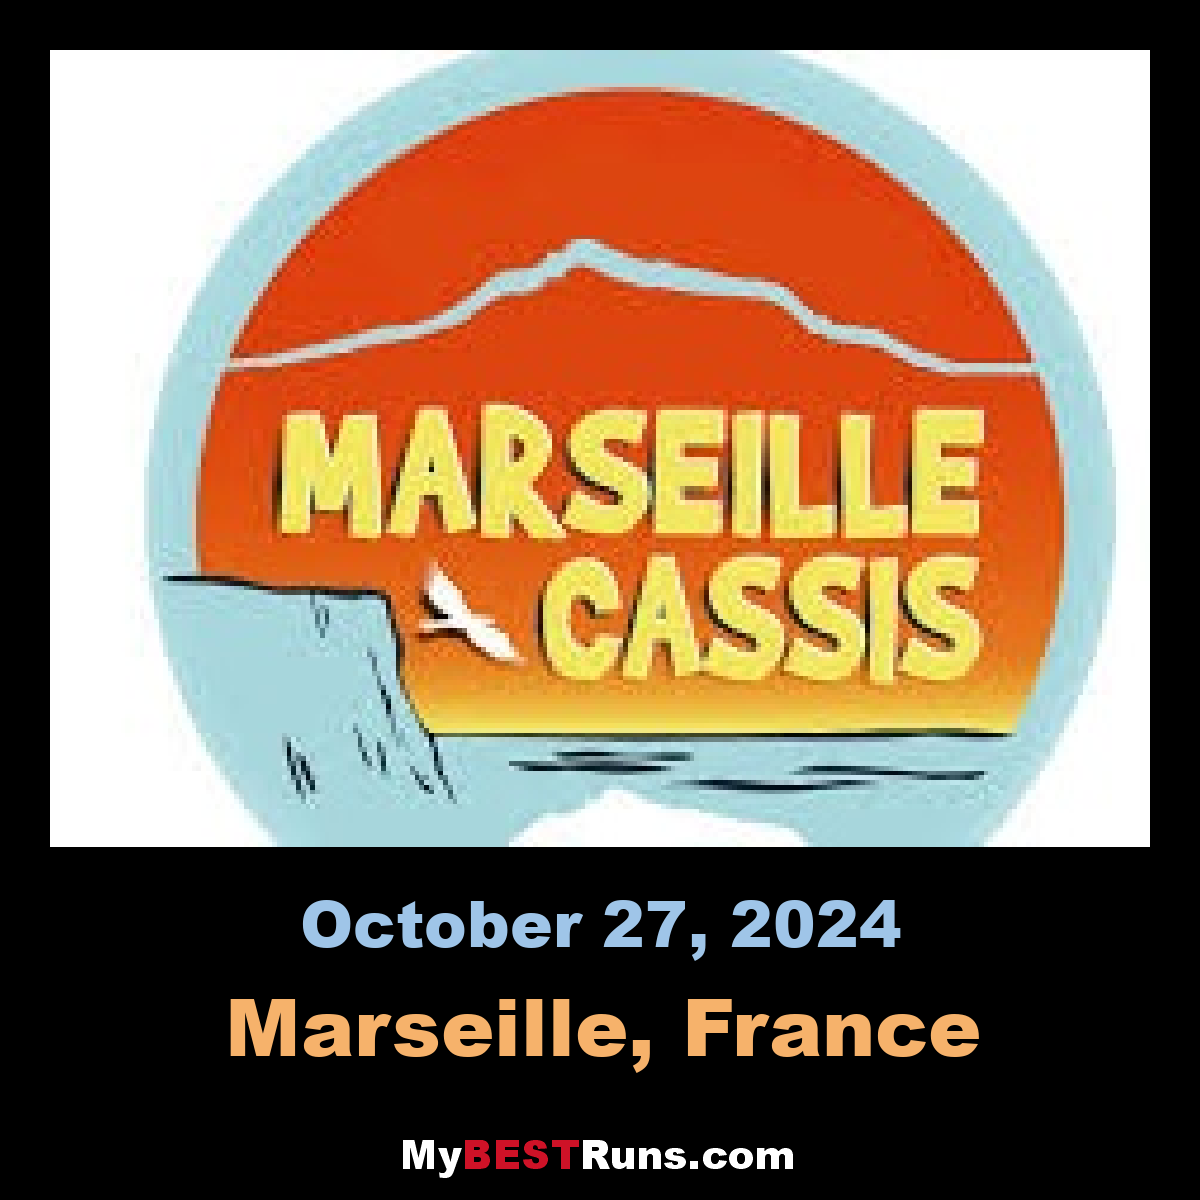 Marseille Cassis